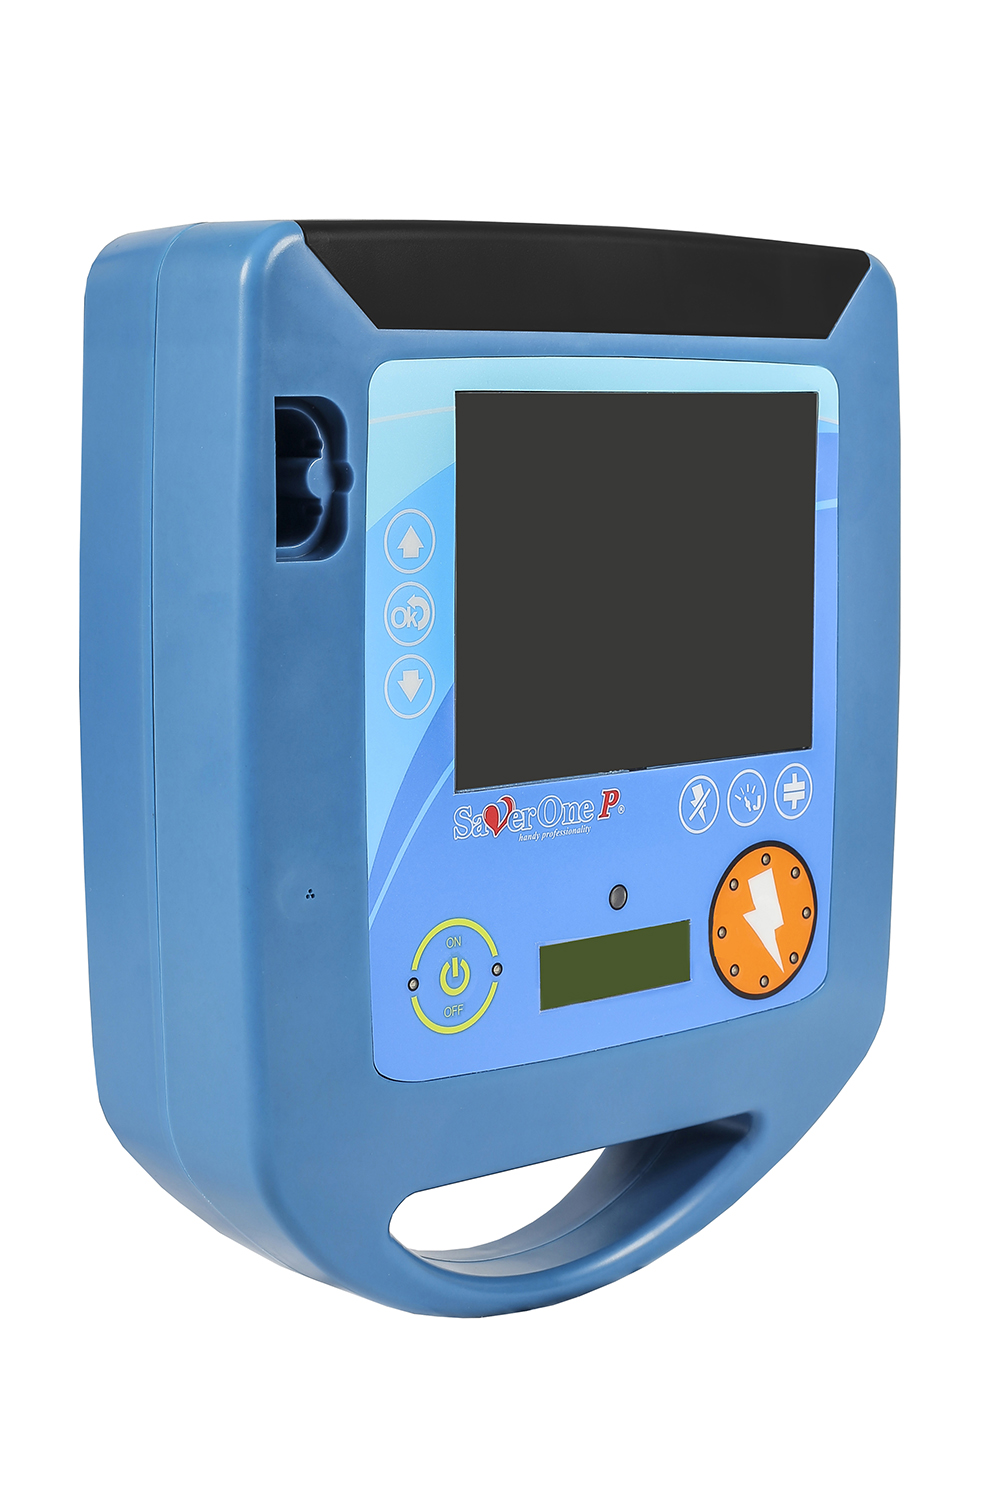 Saver One AED Profi Defibrillator Modell P / Drucker / 360 Joule